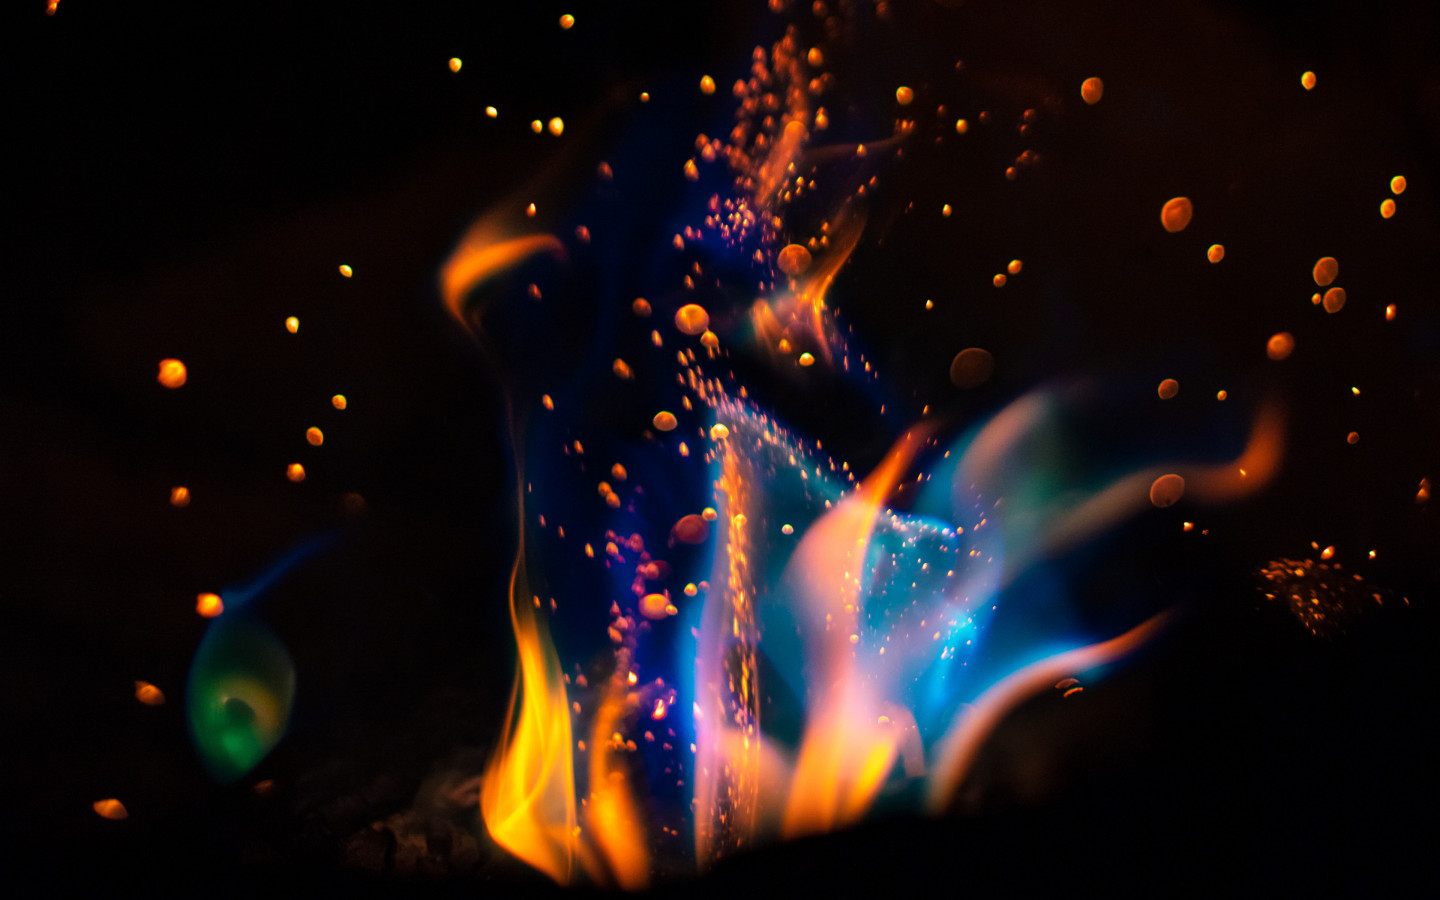 Hot flames in darkness wallpaper 1440x900